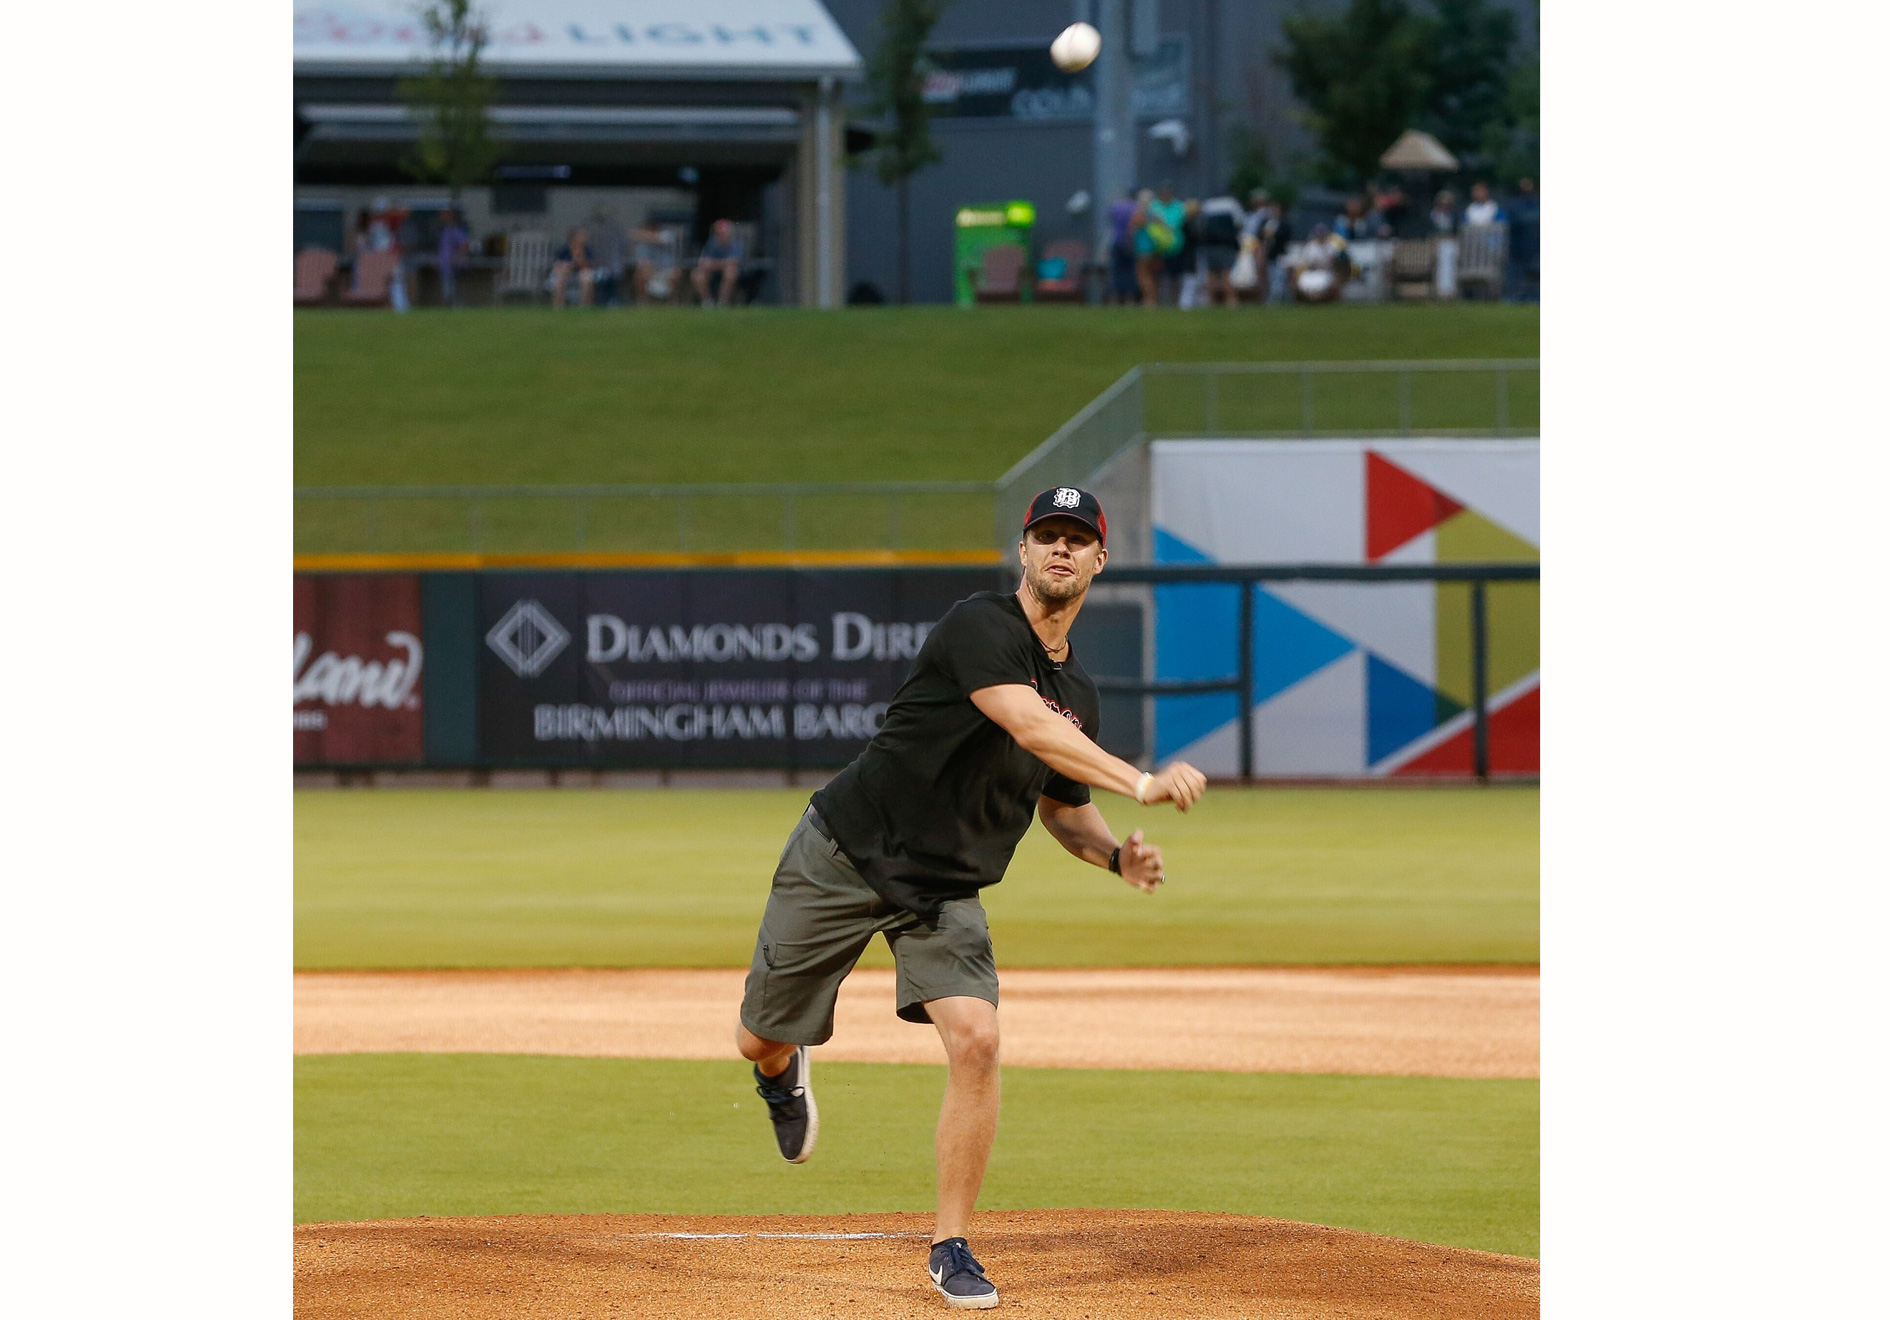 a man throwing a ball at a baseball field